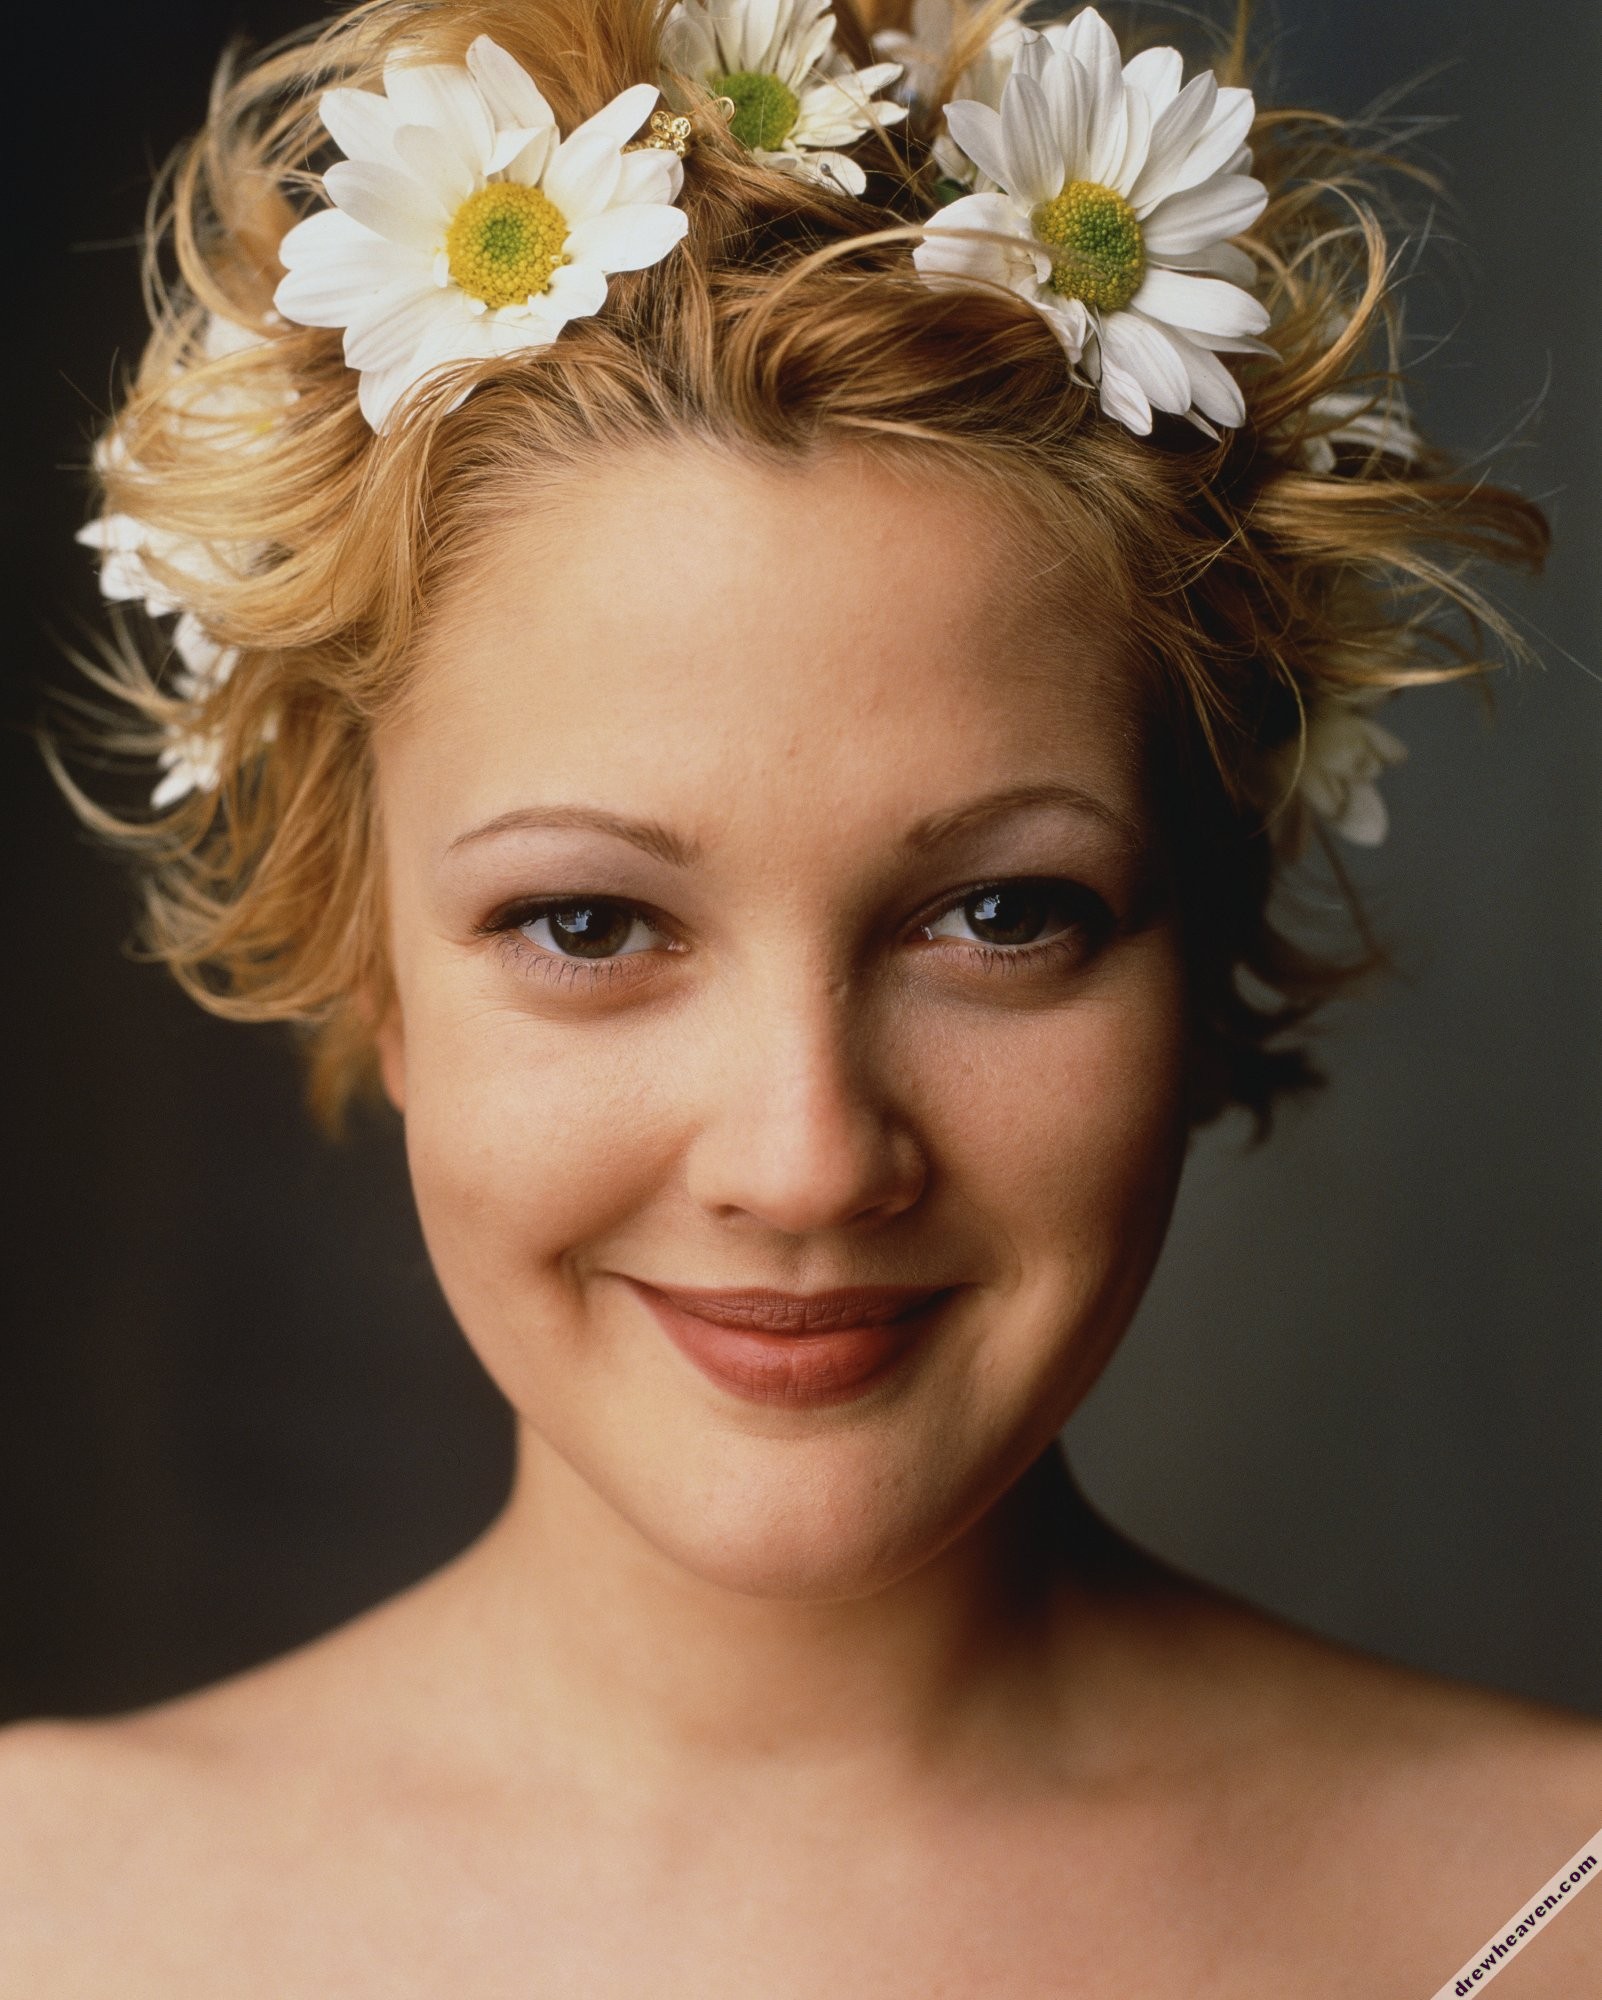 Women Actress Blonde Short Hair Drew Barrymore Face Portrait Looking At Viewer Smiling Brown Eyes Fl 1602x2000